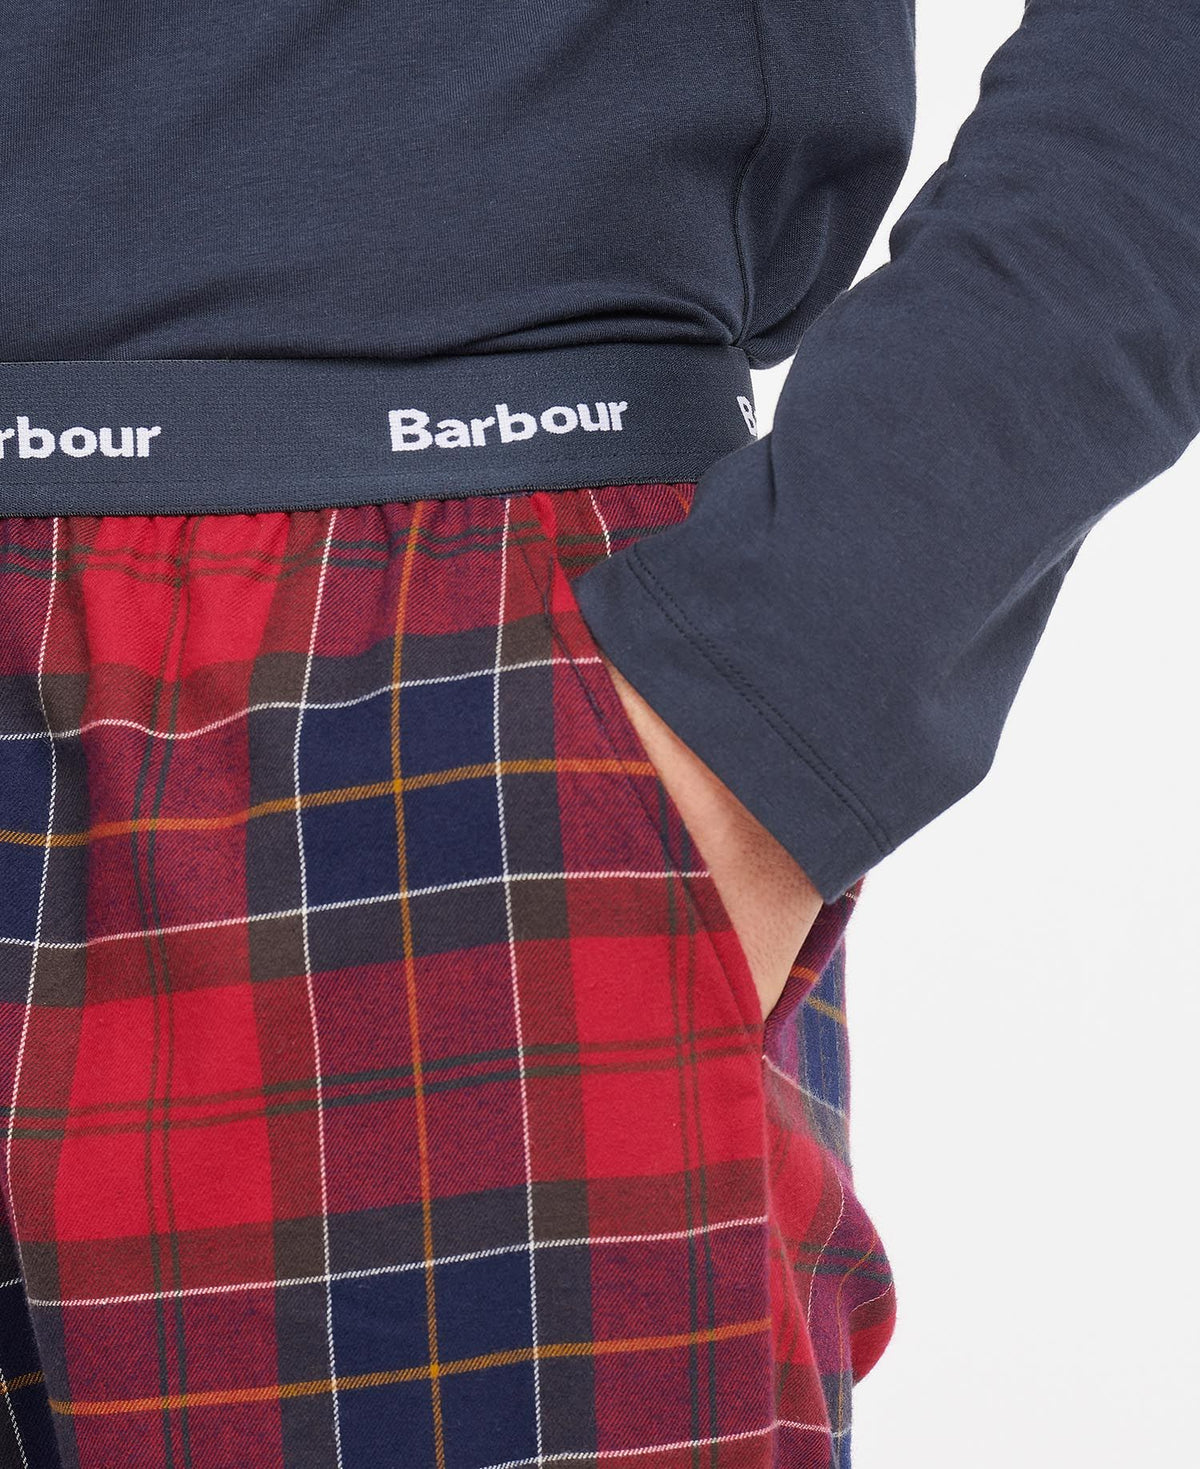 Barbour Mens 'Doug' PJ/ Pyjama Set - L/S Tee and Checked Long Bottoms, 05, Mnw0012, Red Tartan